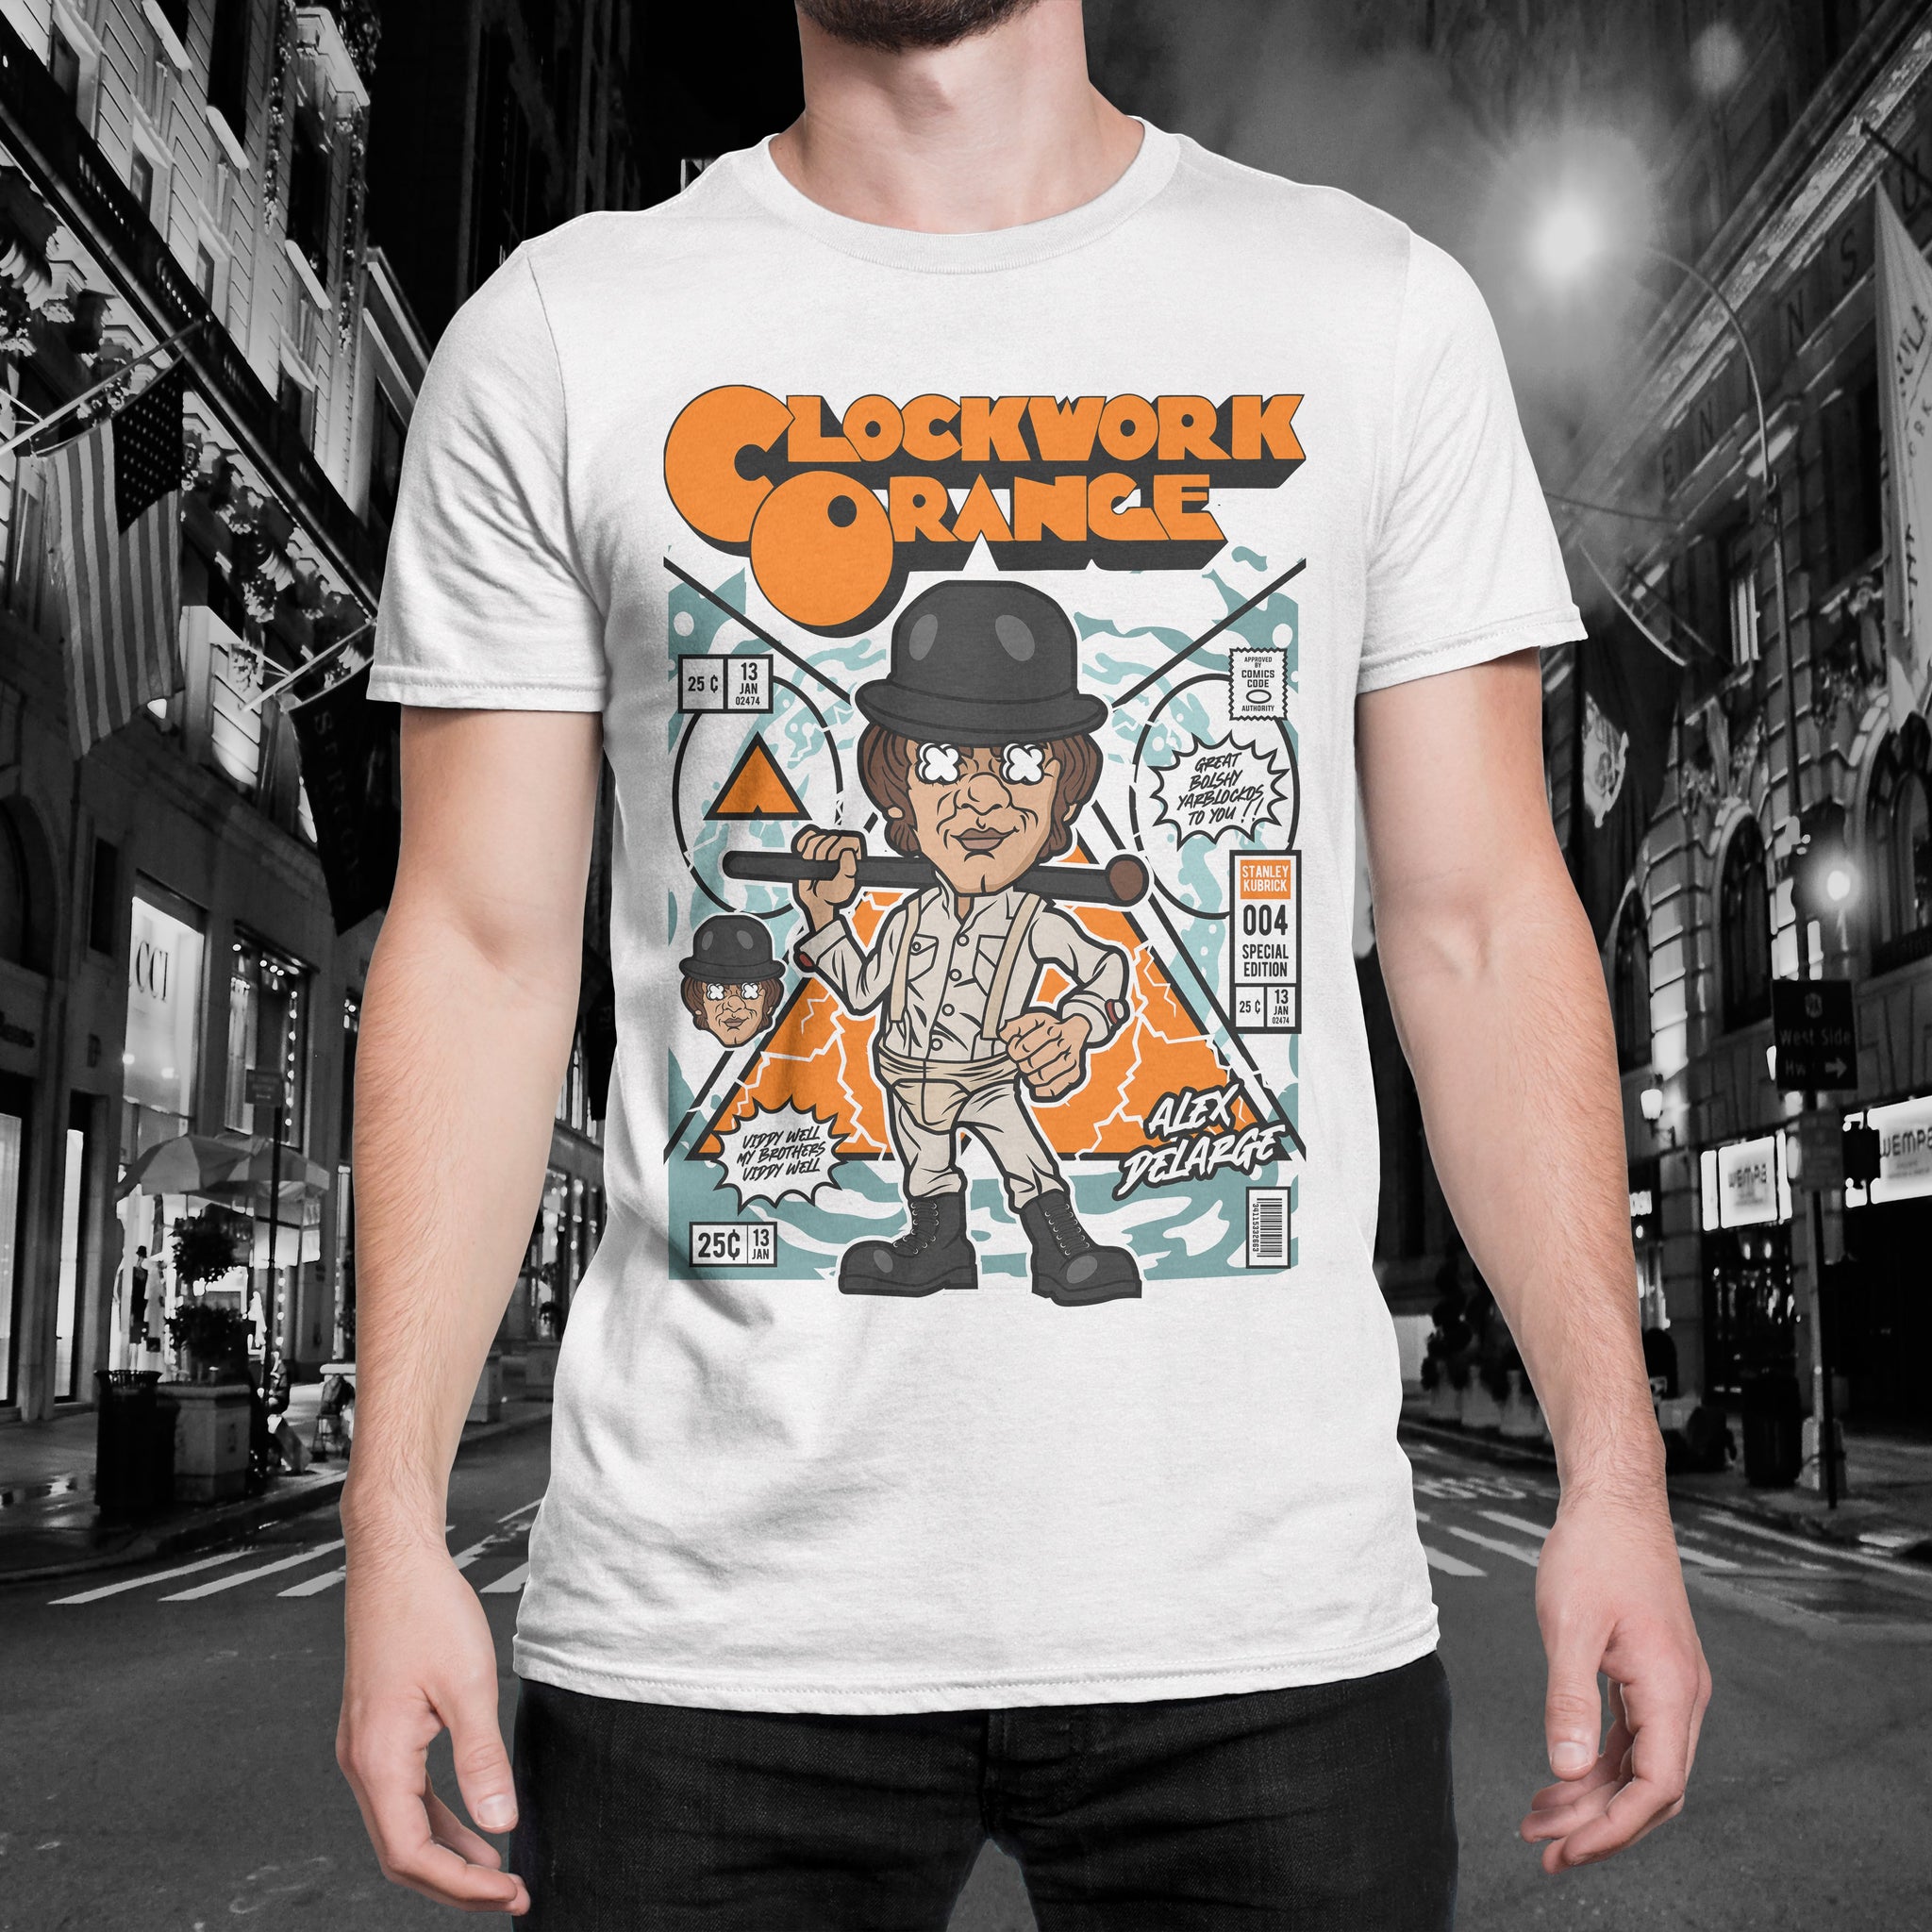 A Clockwork Orange "Comic" Tee